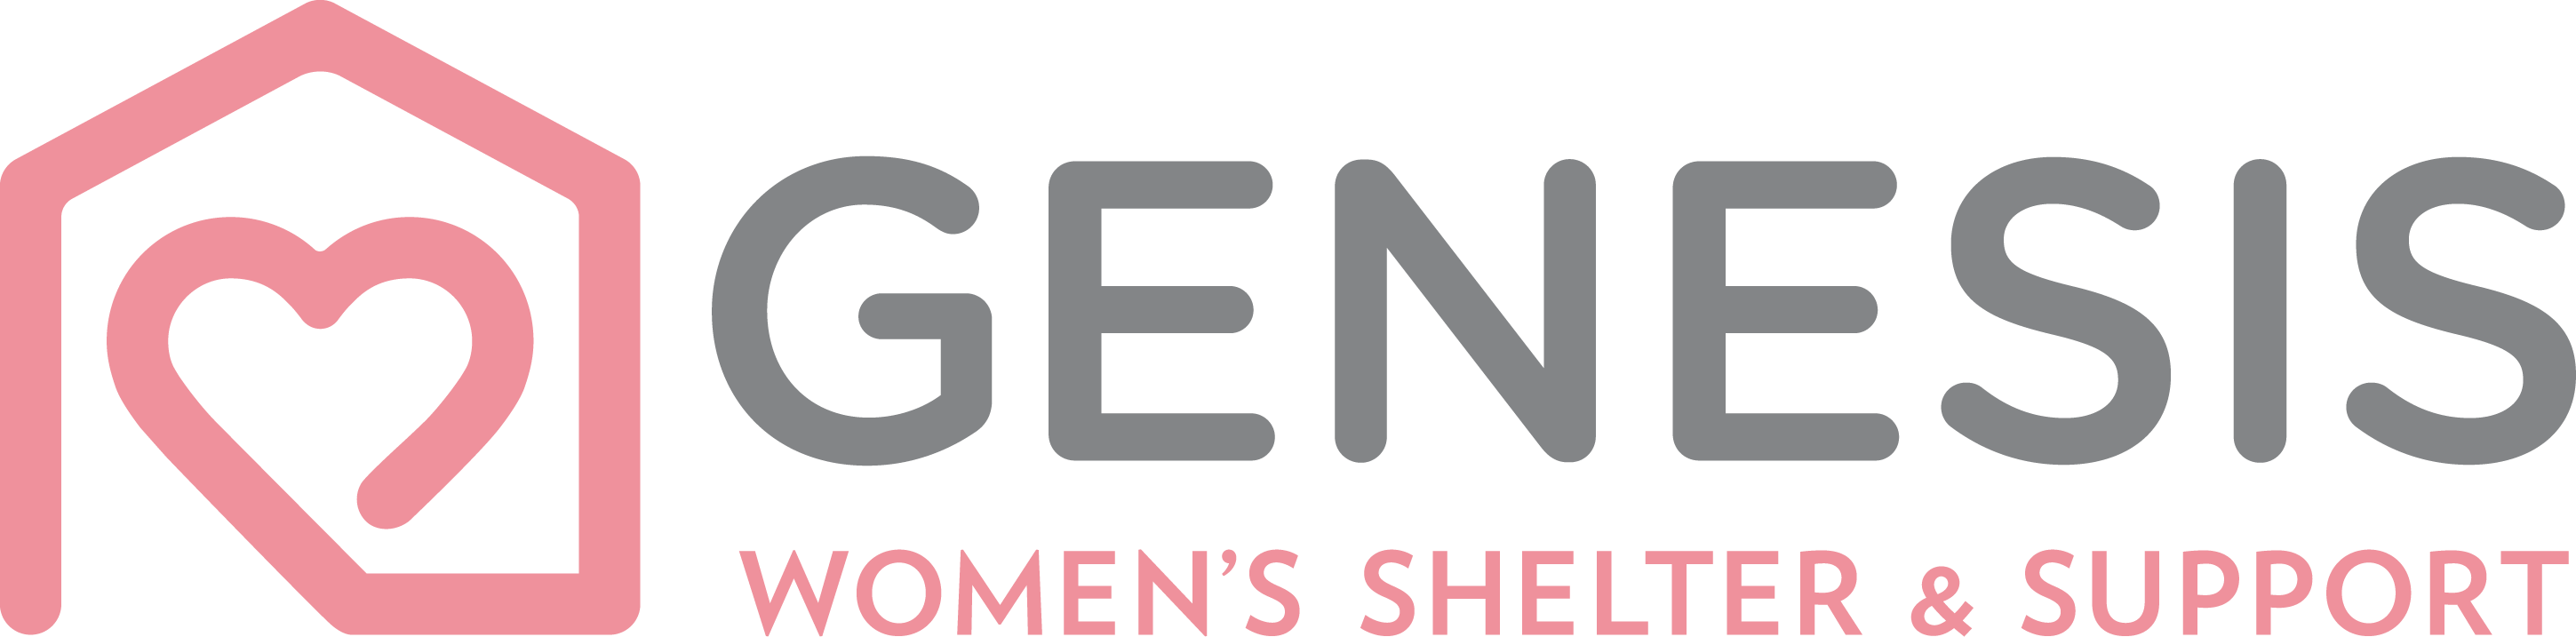 Primary Genesis Logo